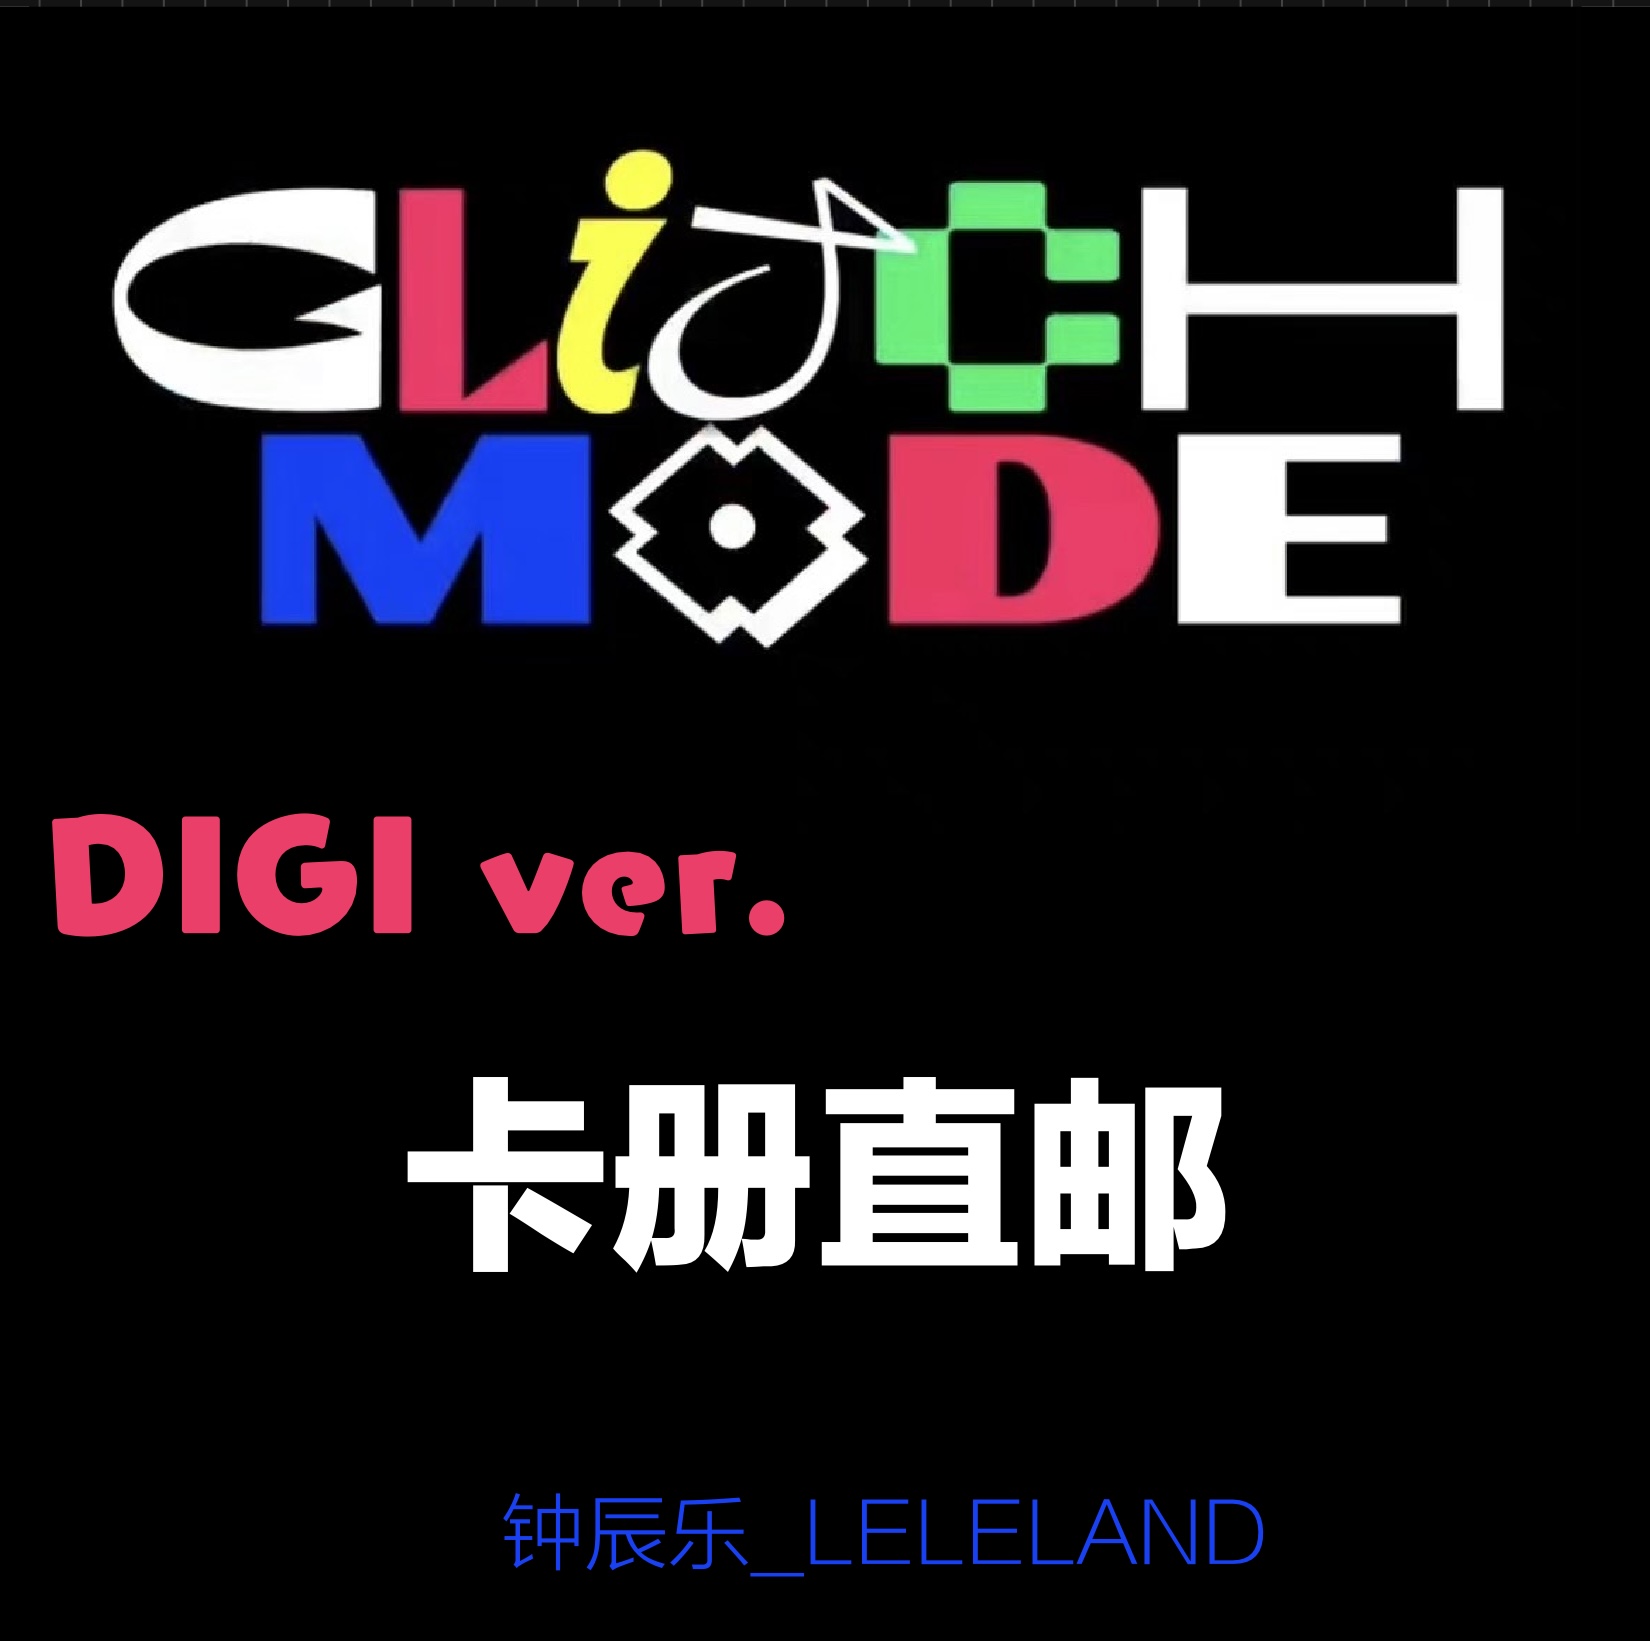 [全款 卡册特典] NCT DREAM - 正规2辑 [Glitch Mode] (Digipack Ver.) (随机版本)_钟辰乐吧_ChenLeBar